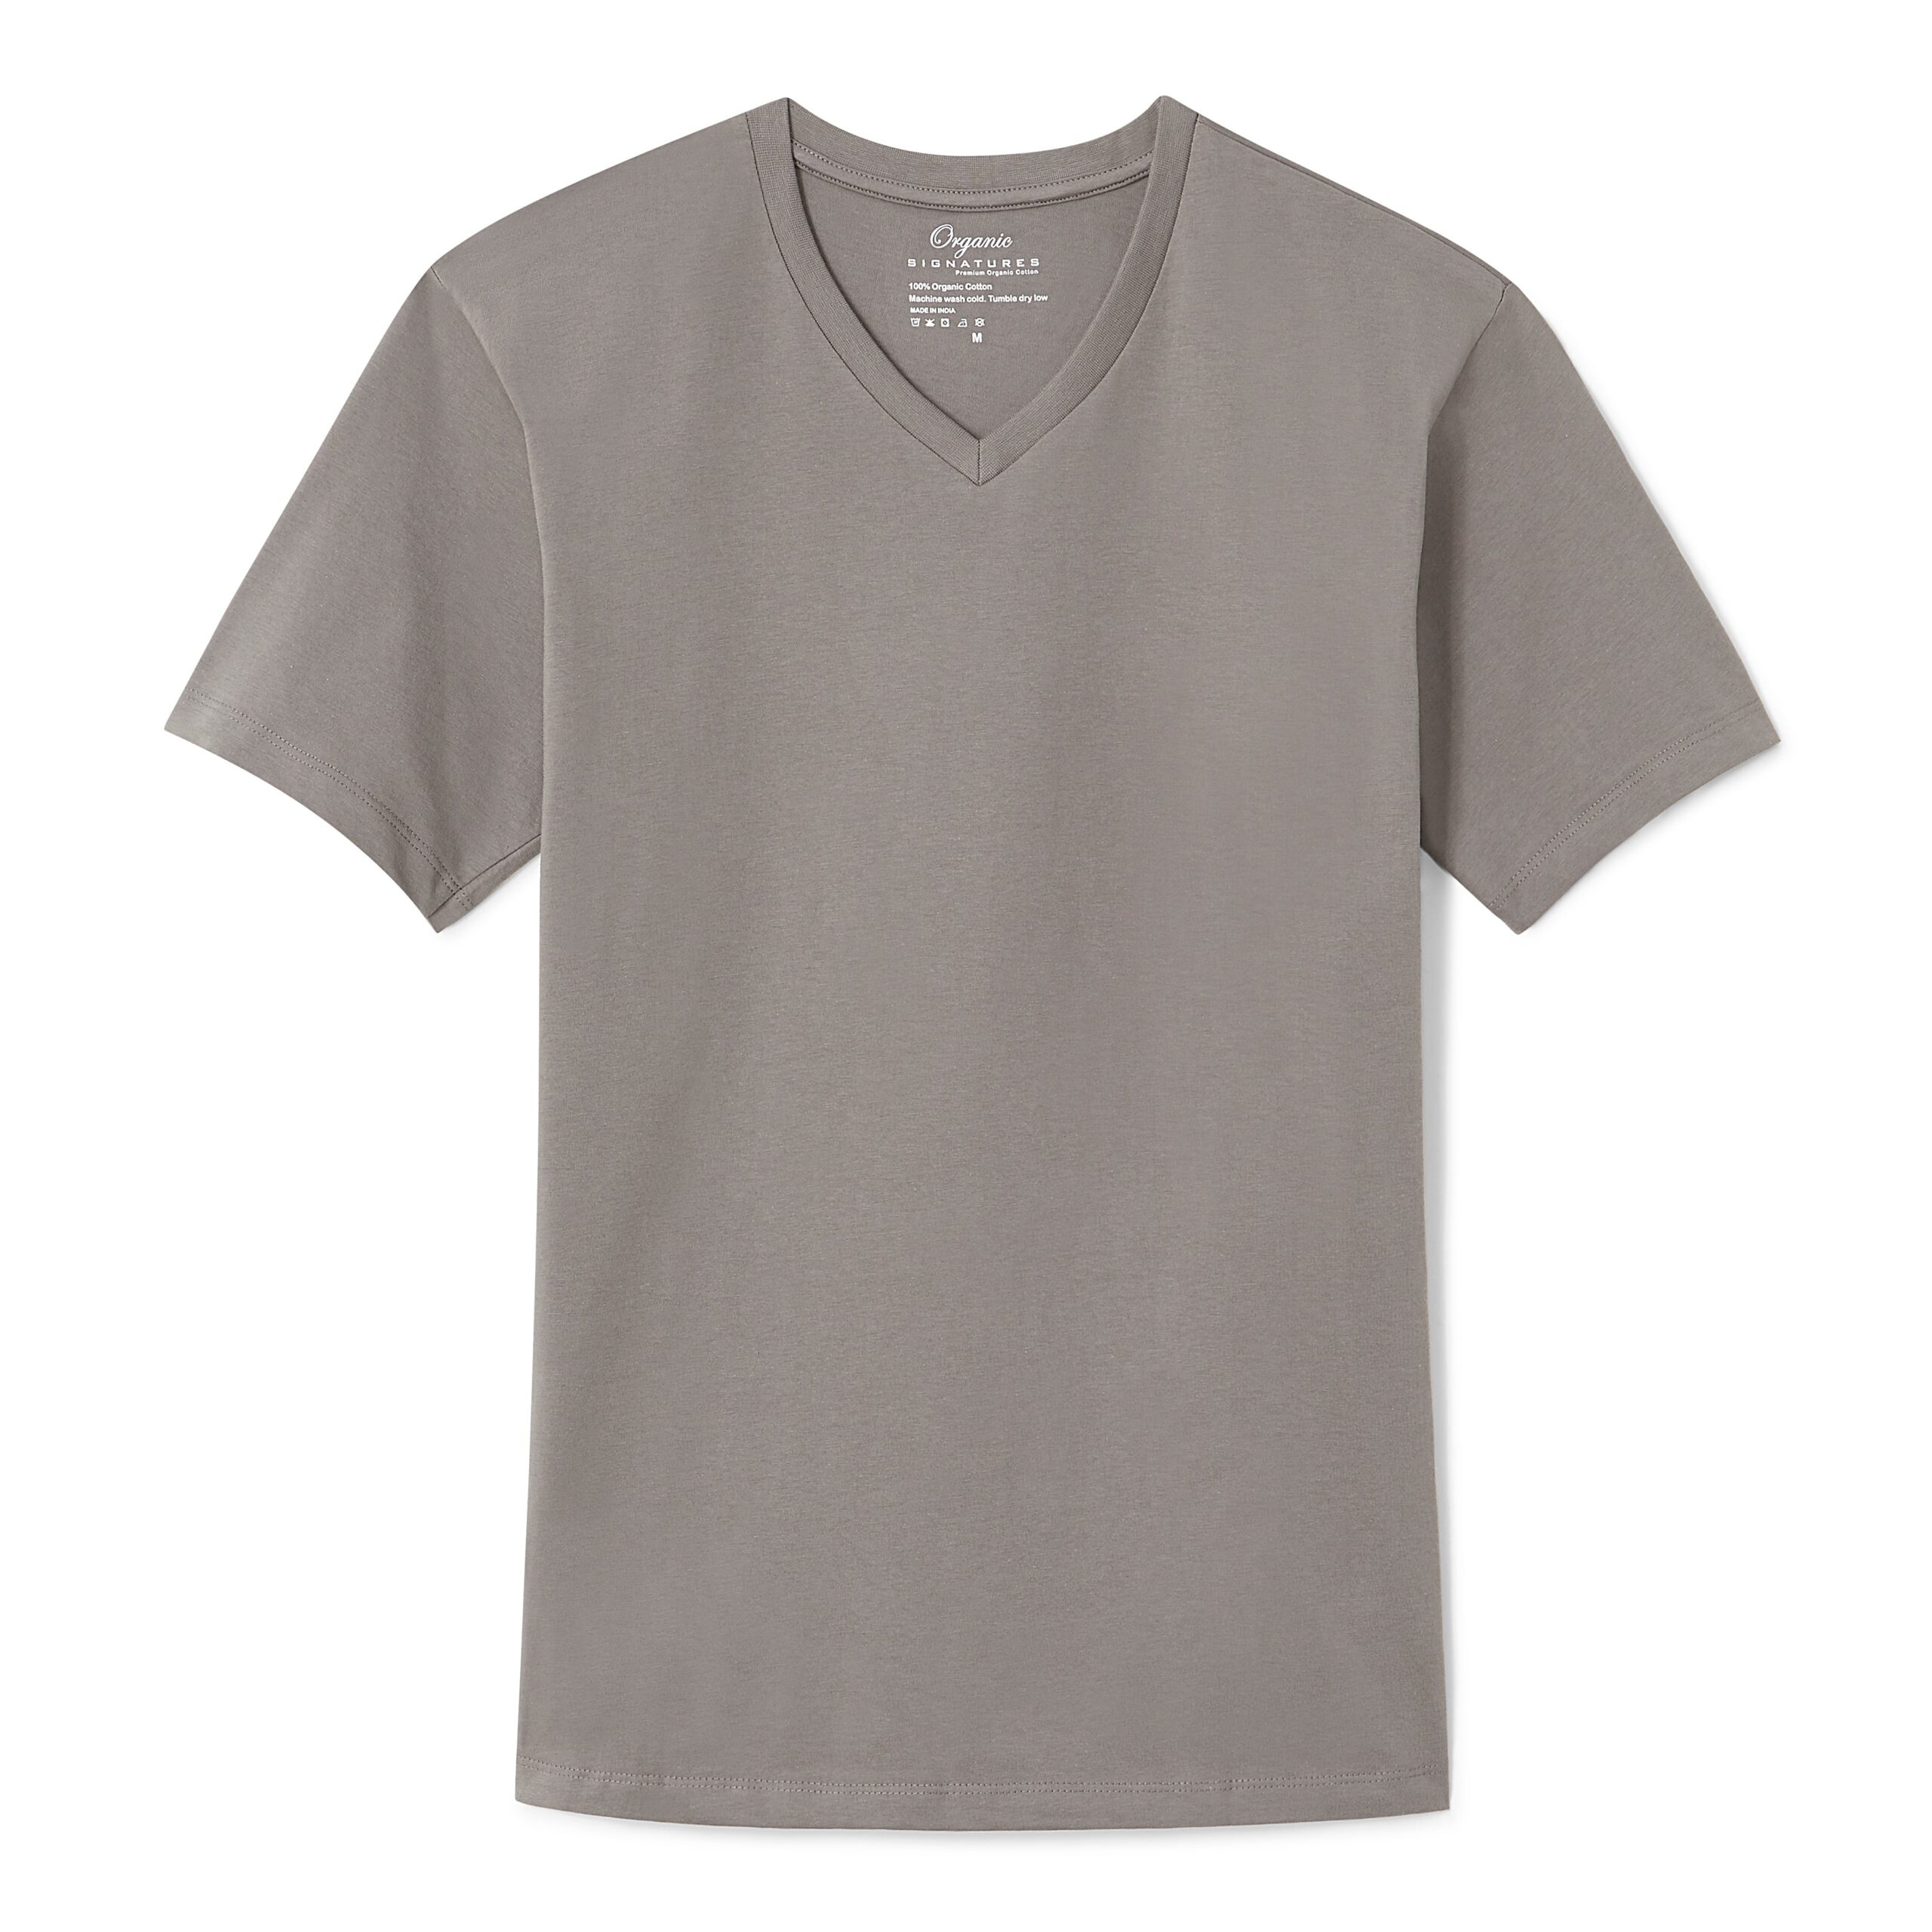 Grey Cotton T-Shirt for Men &#8211; V-Neck Short Sleeve